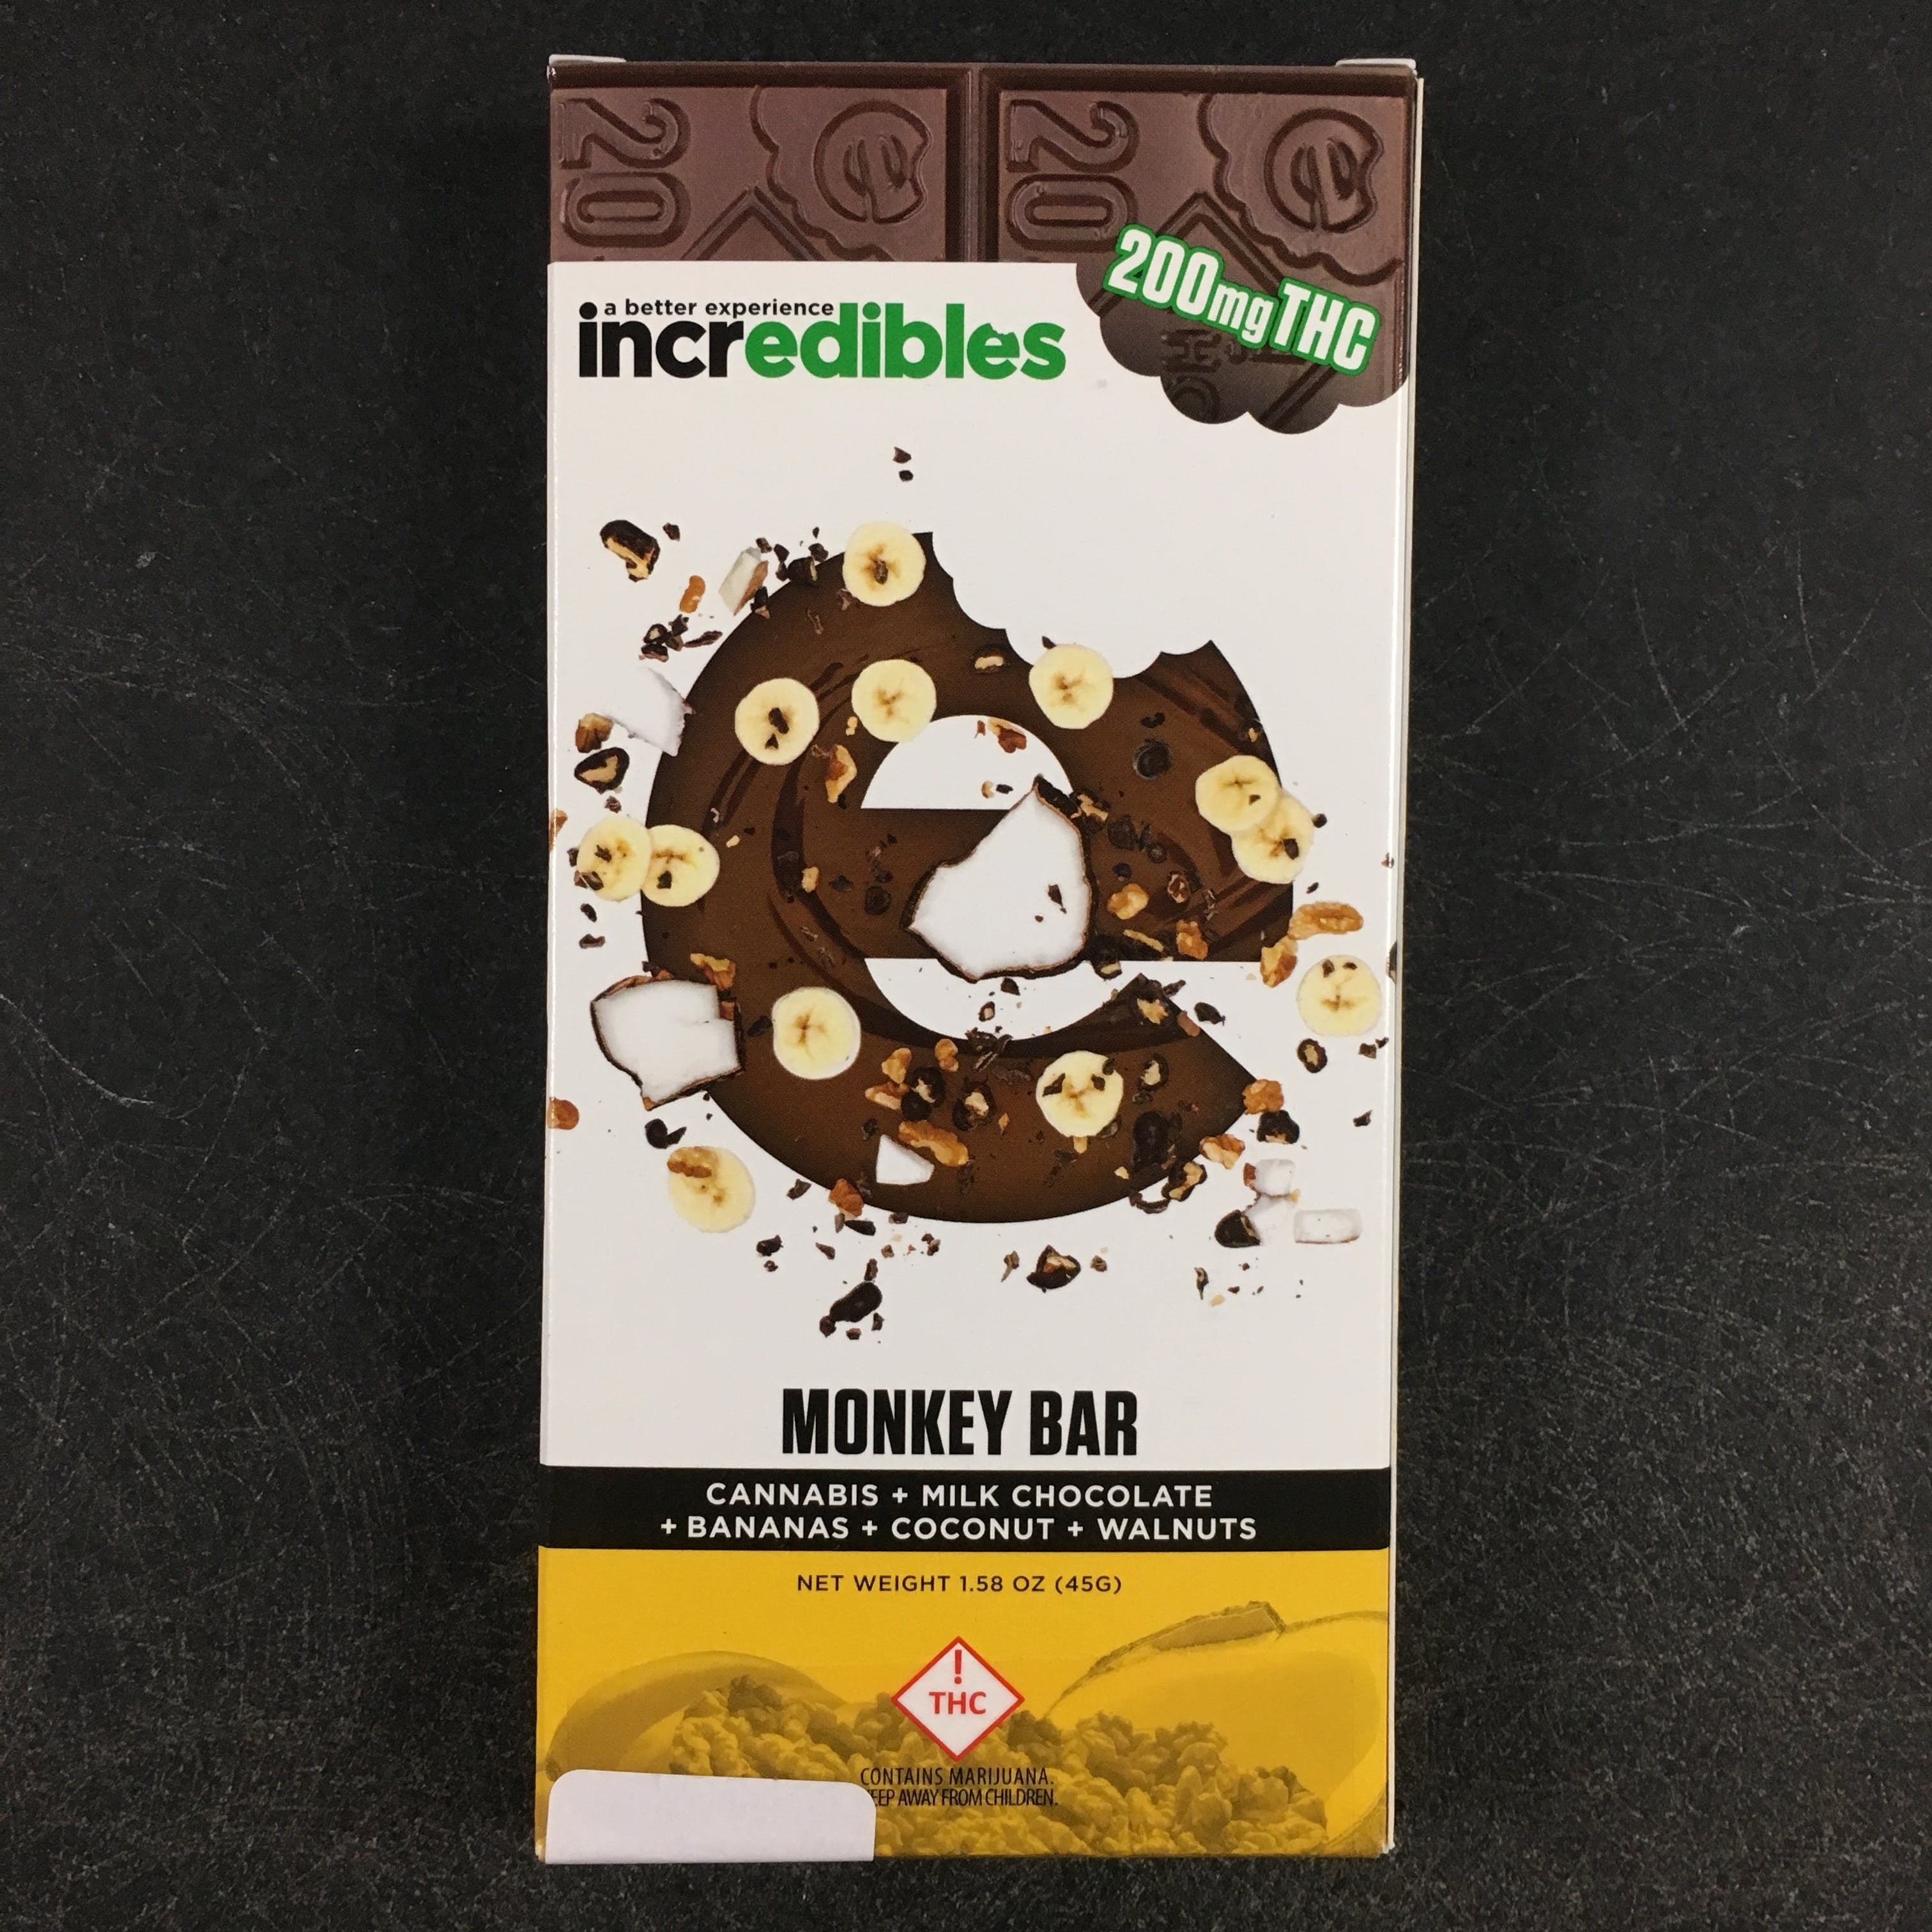 Incredibles, Monkey Bar 200mg